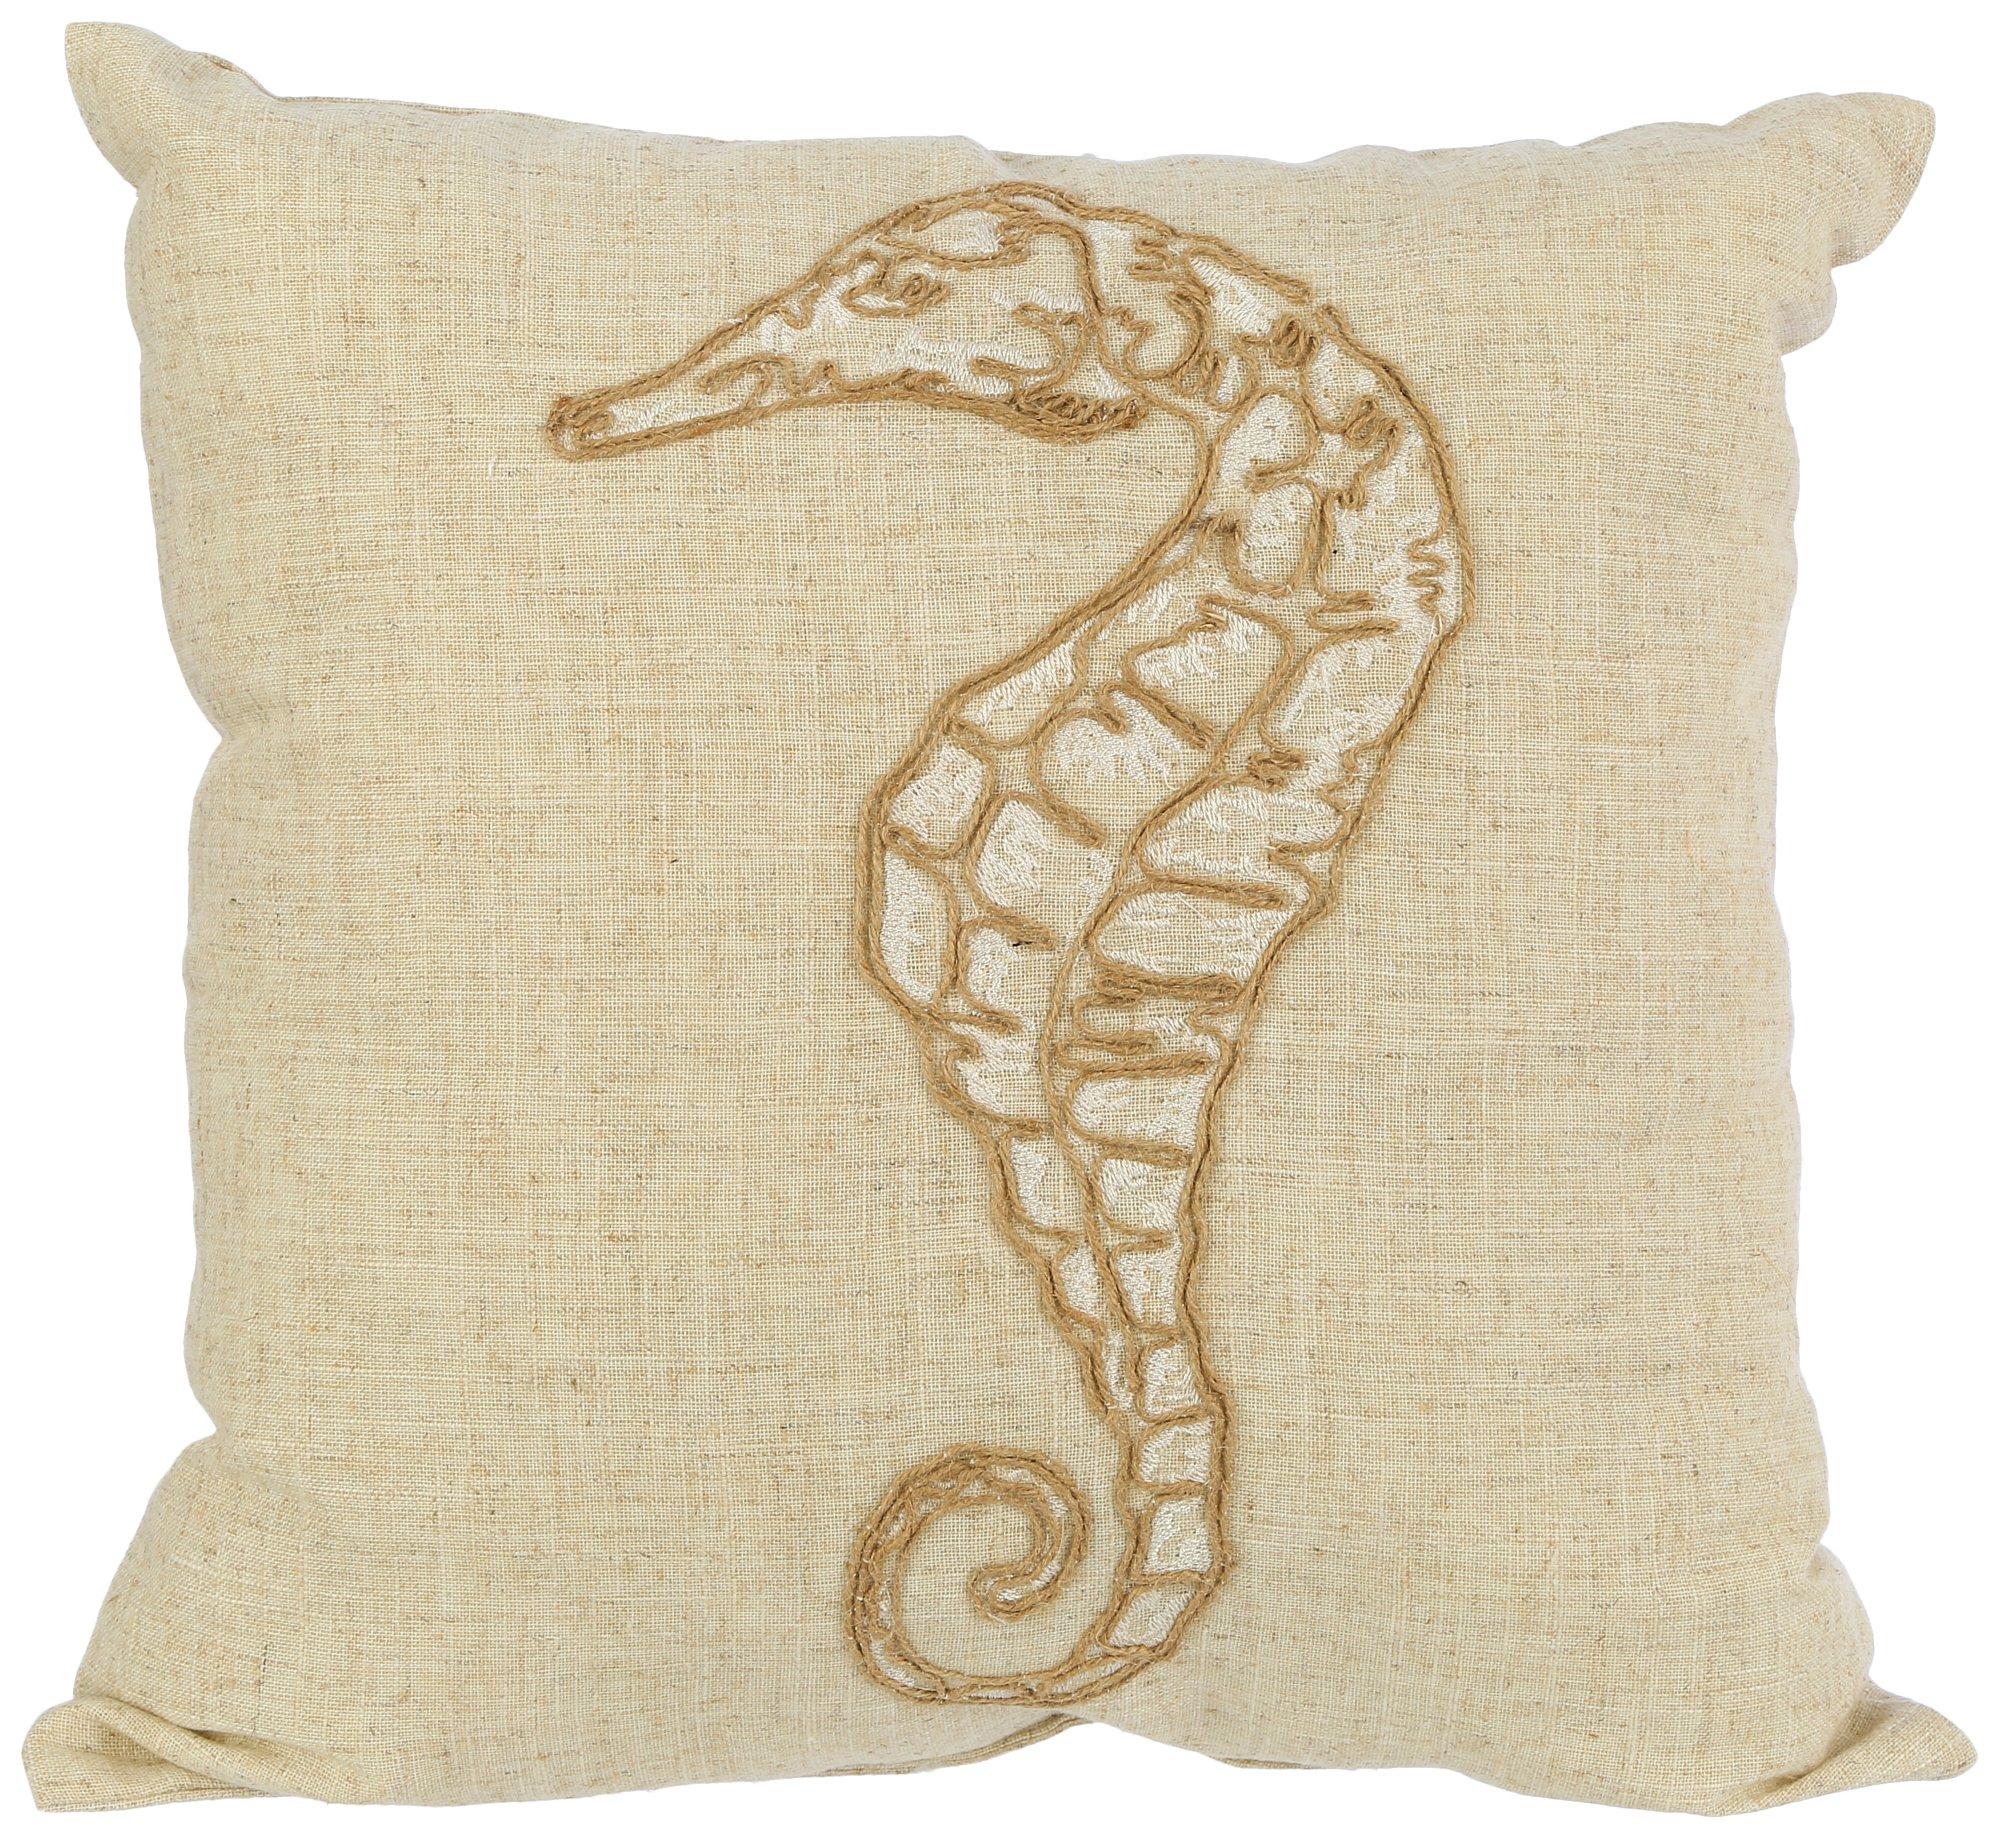 18 x 18 Seahorse Decorative Pillow